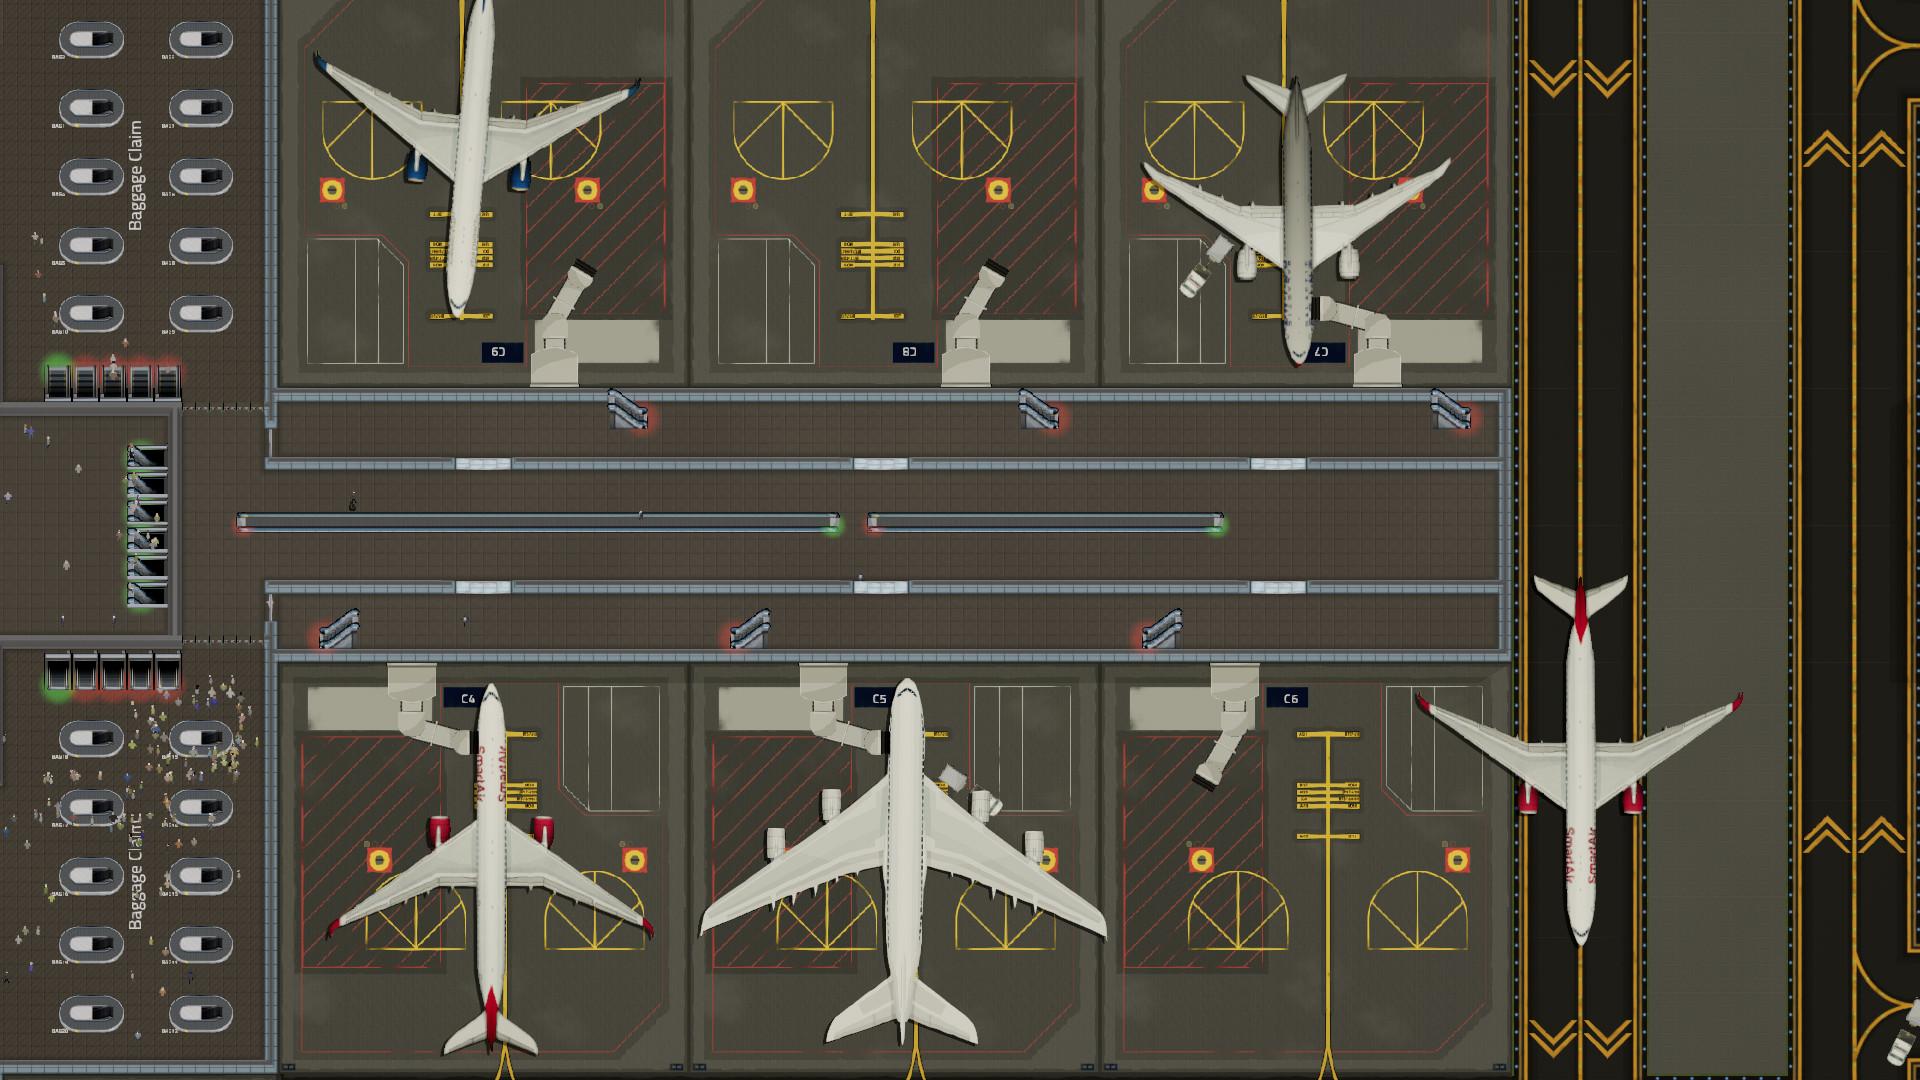 Screenshot №10 from game SimAirport